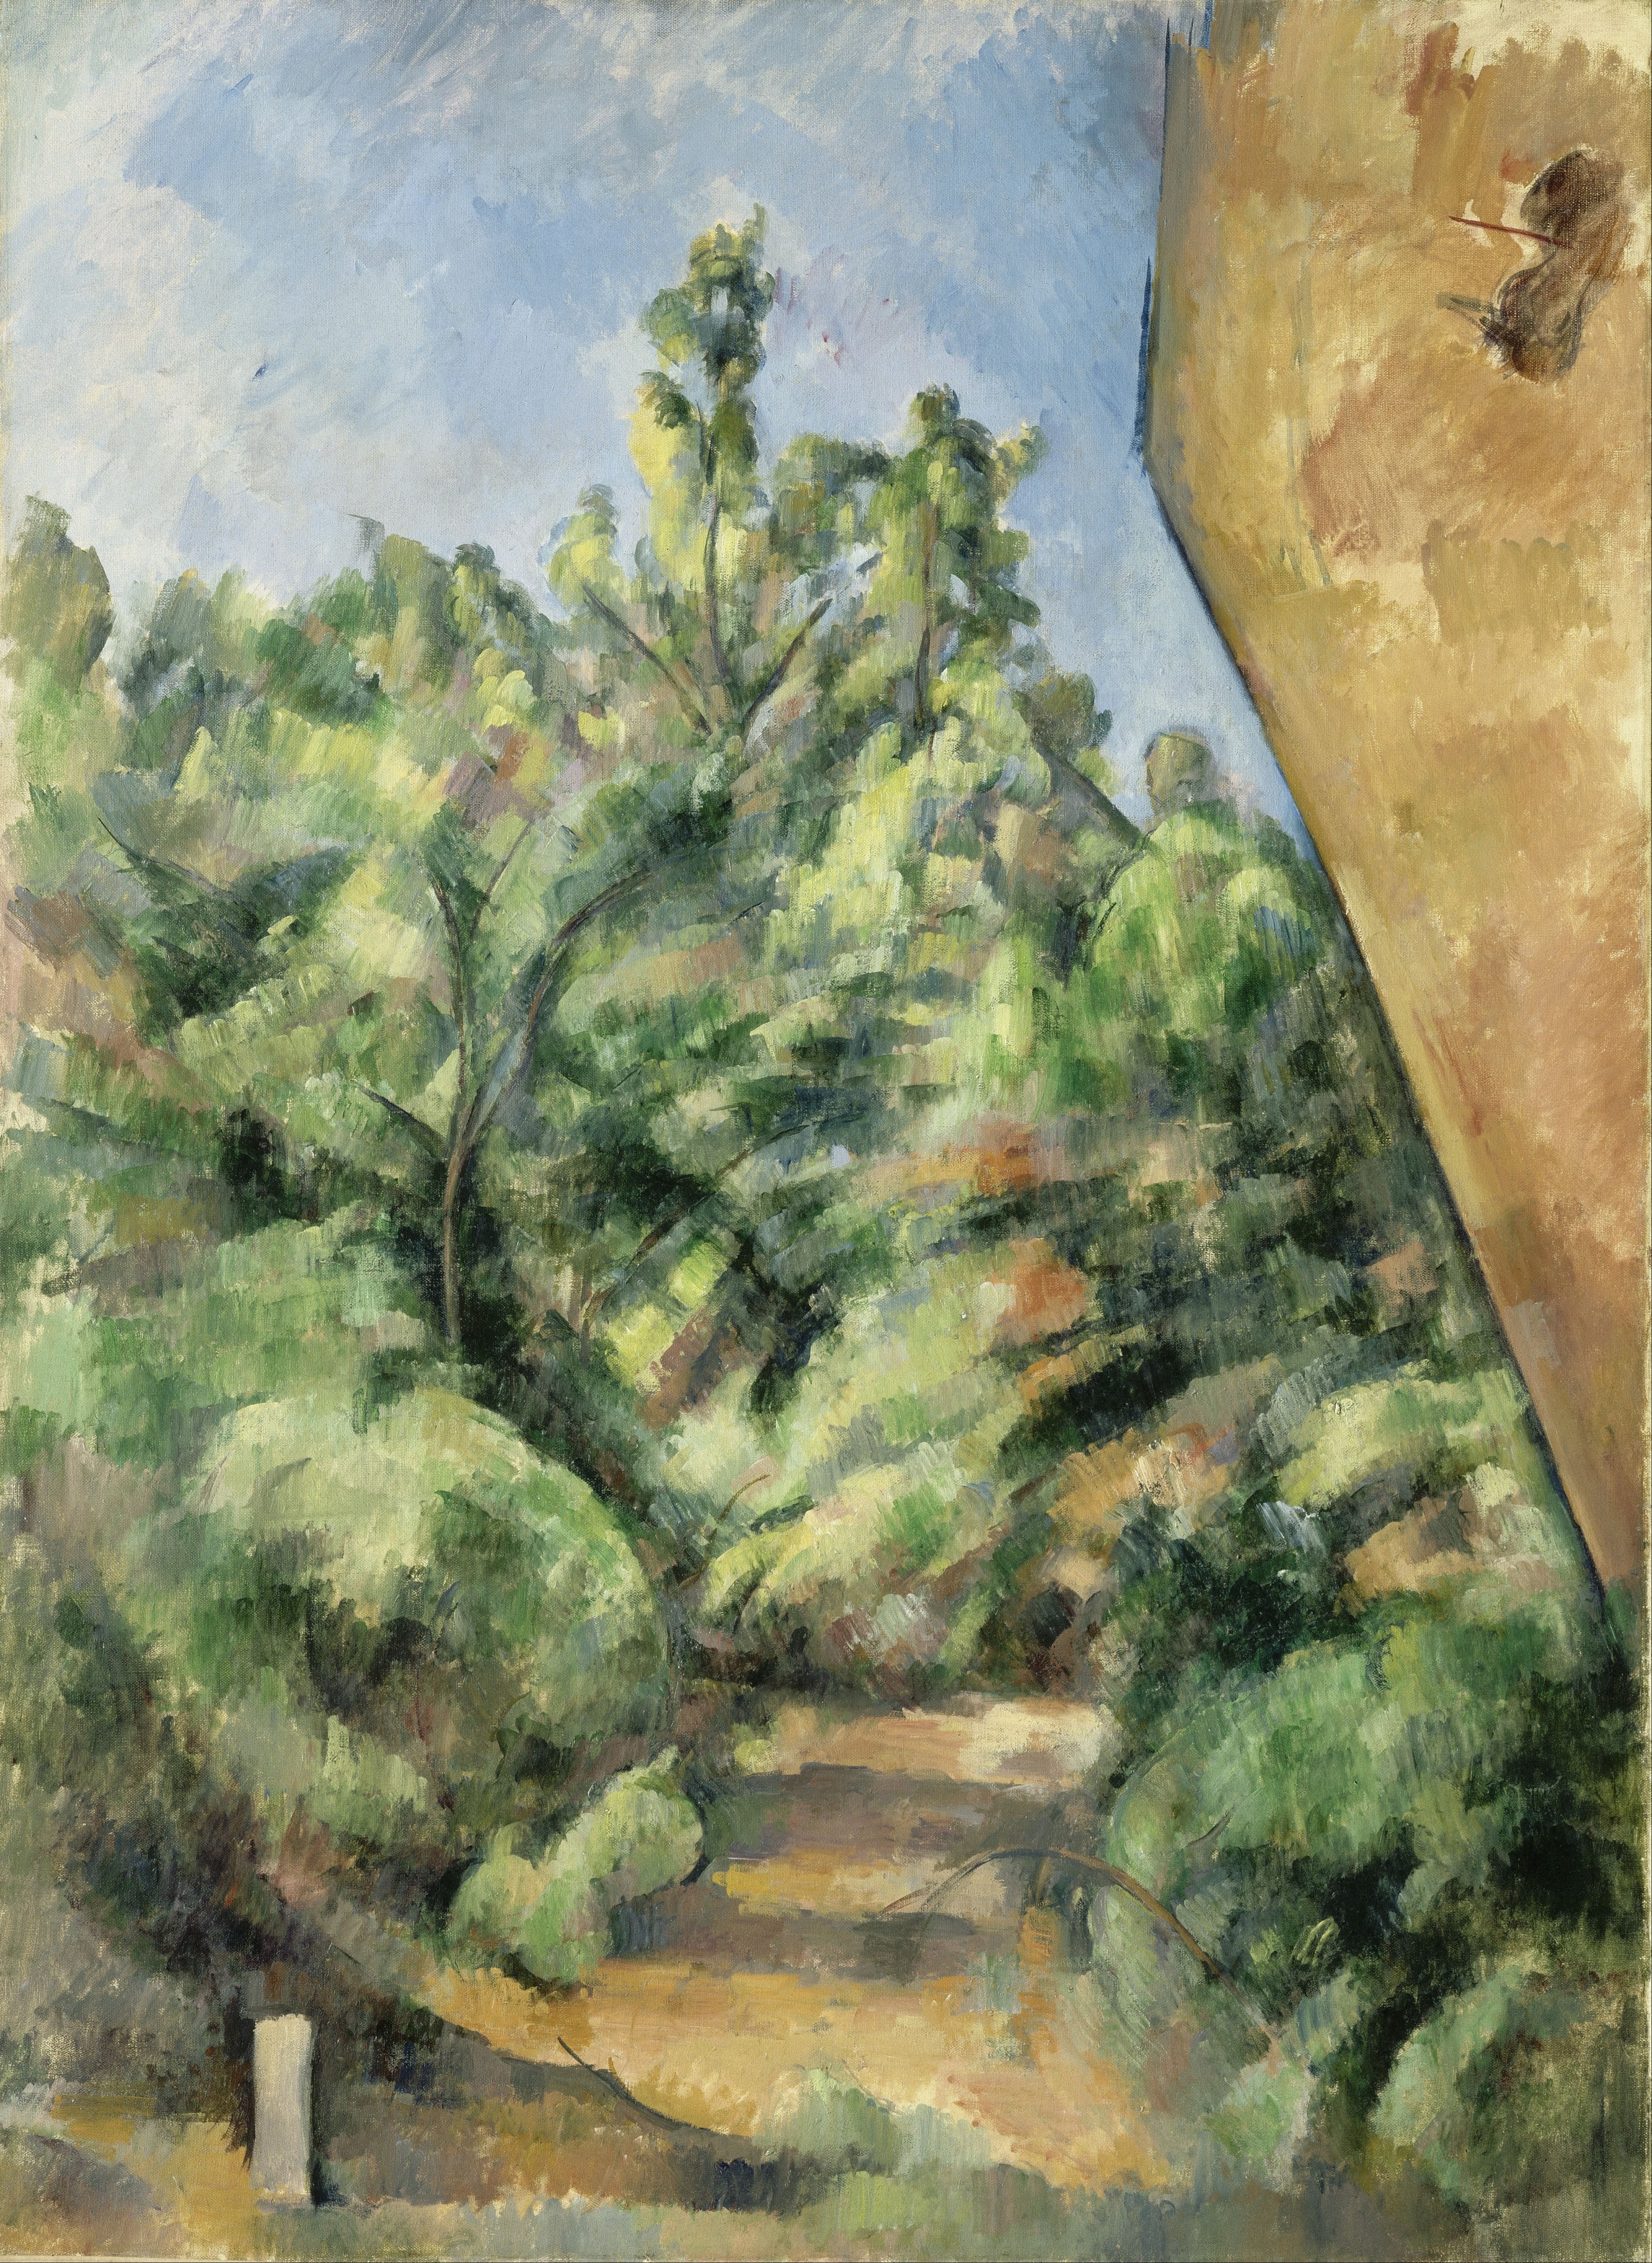 Paul Cézanne - The Red Rock - Google Art Project